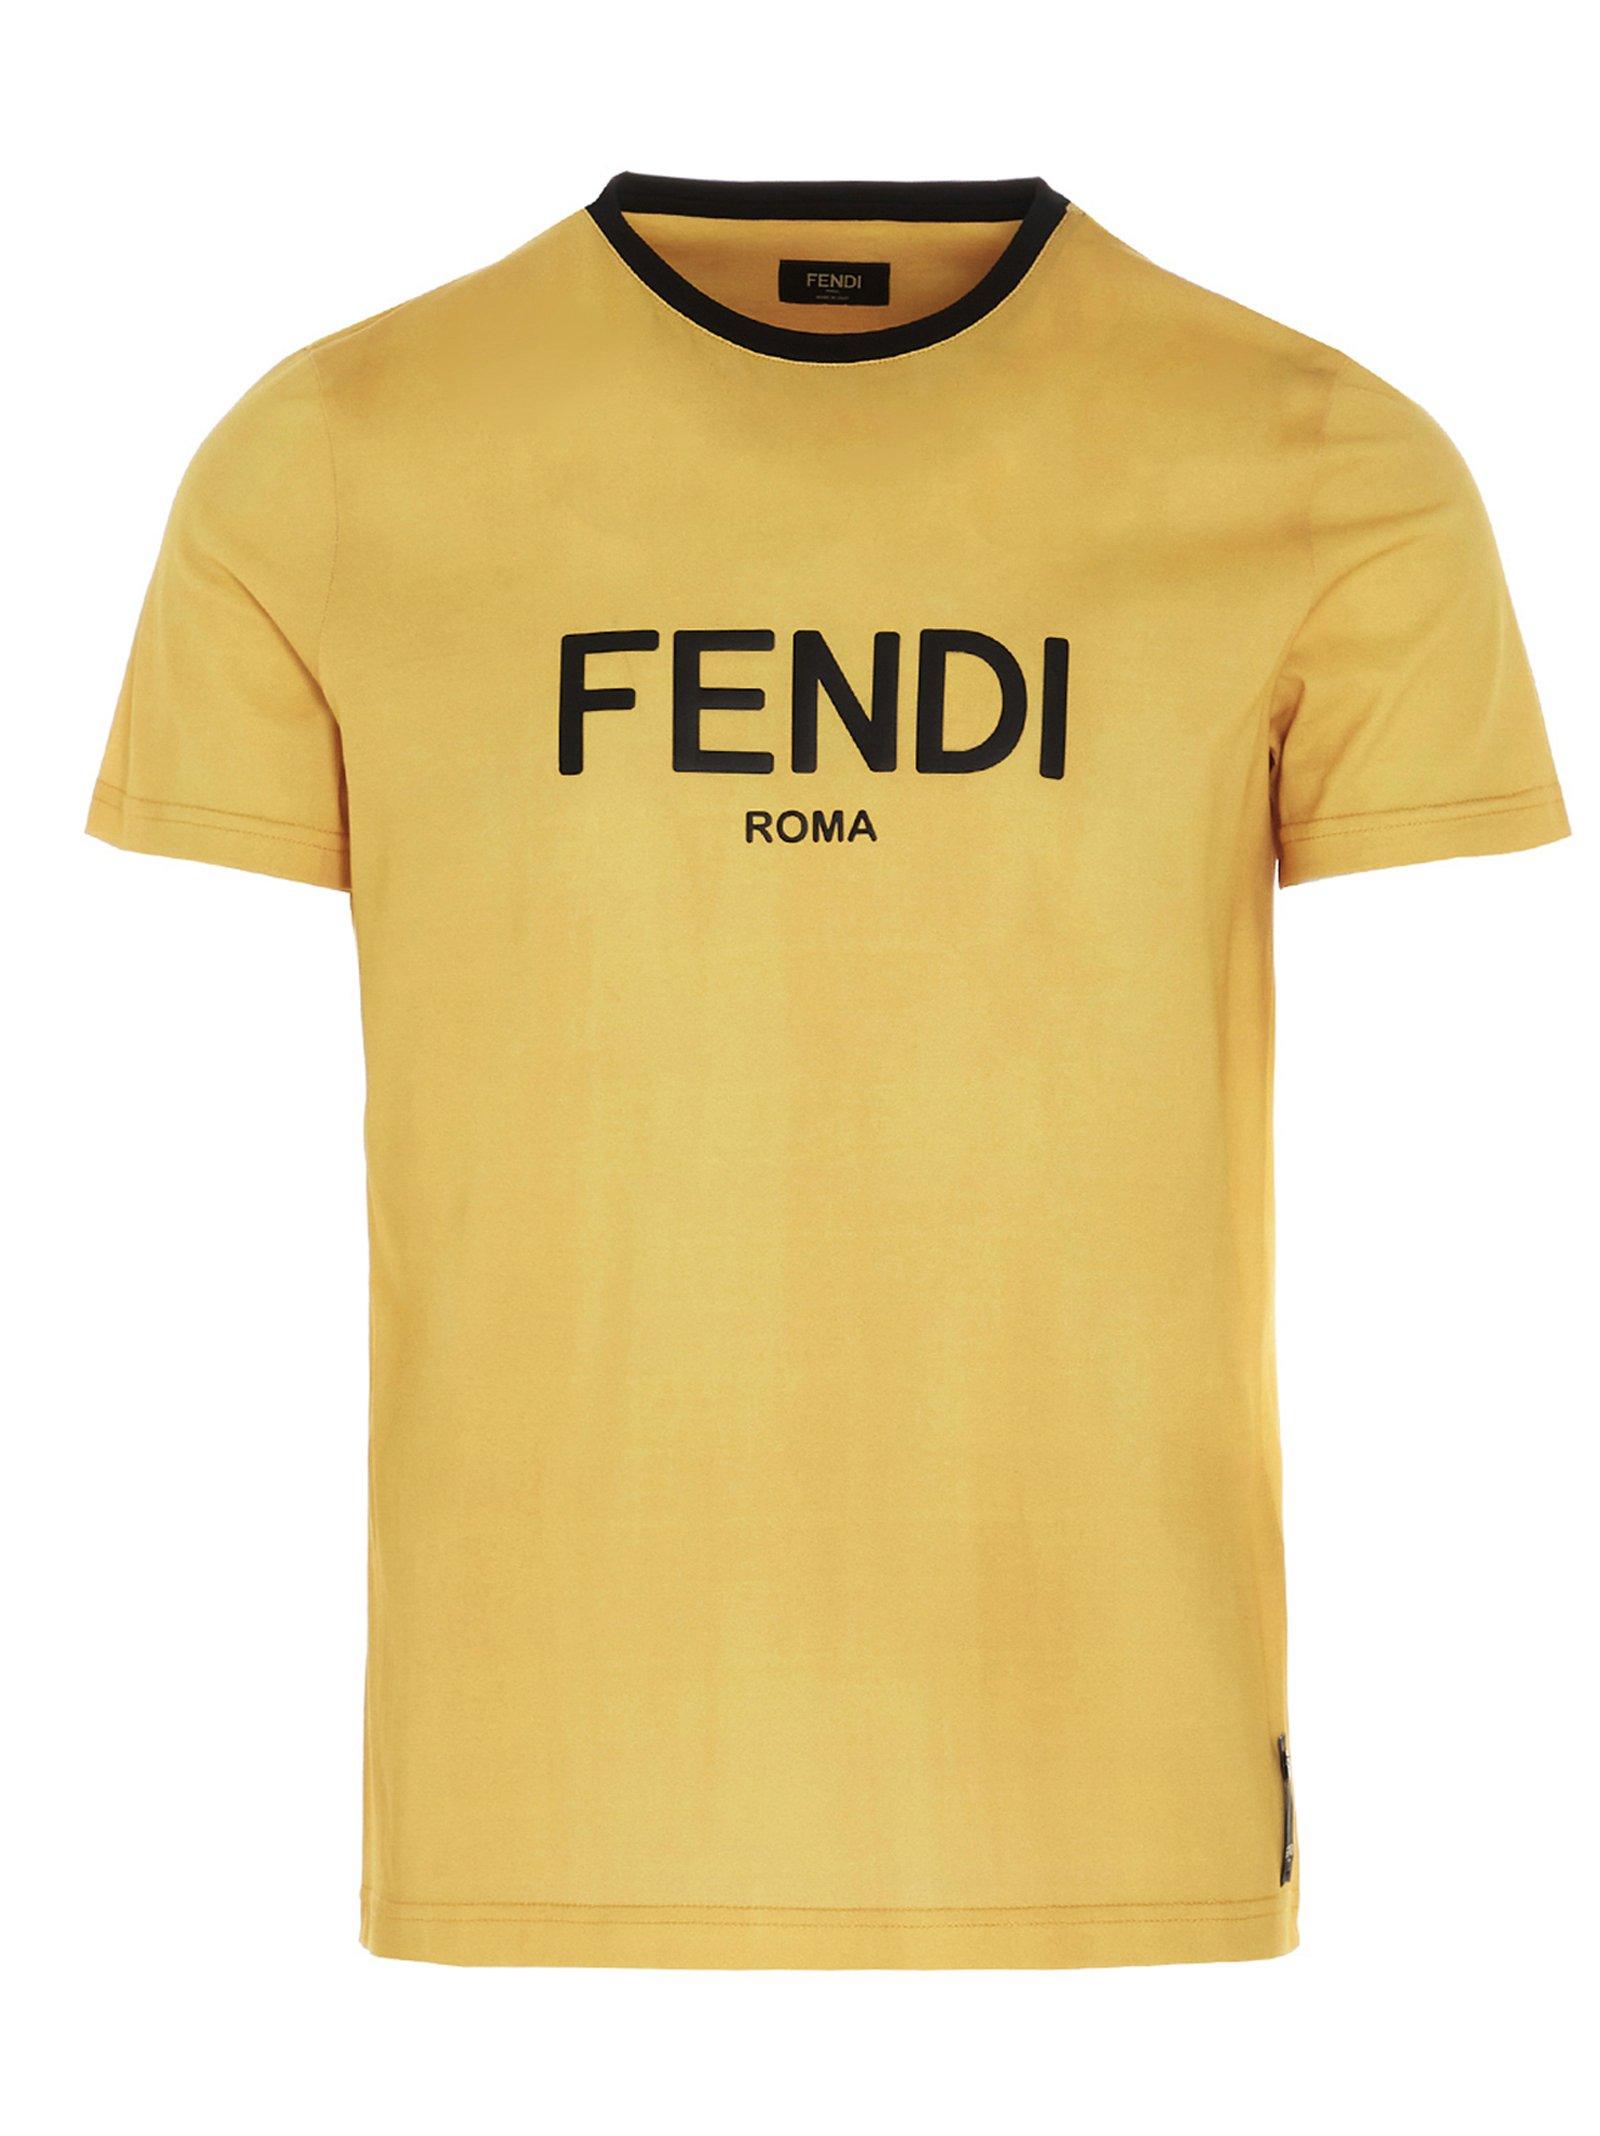 Fendi Cotton T-shirt in Yellow for Men | Lyst